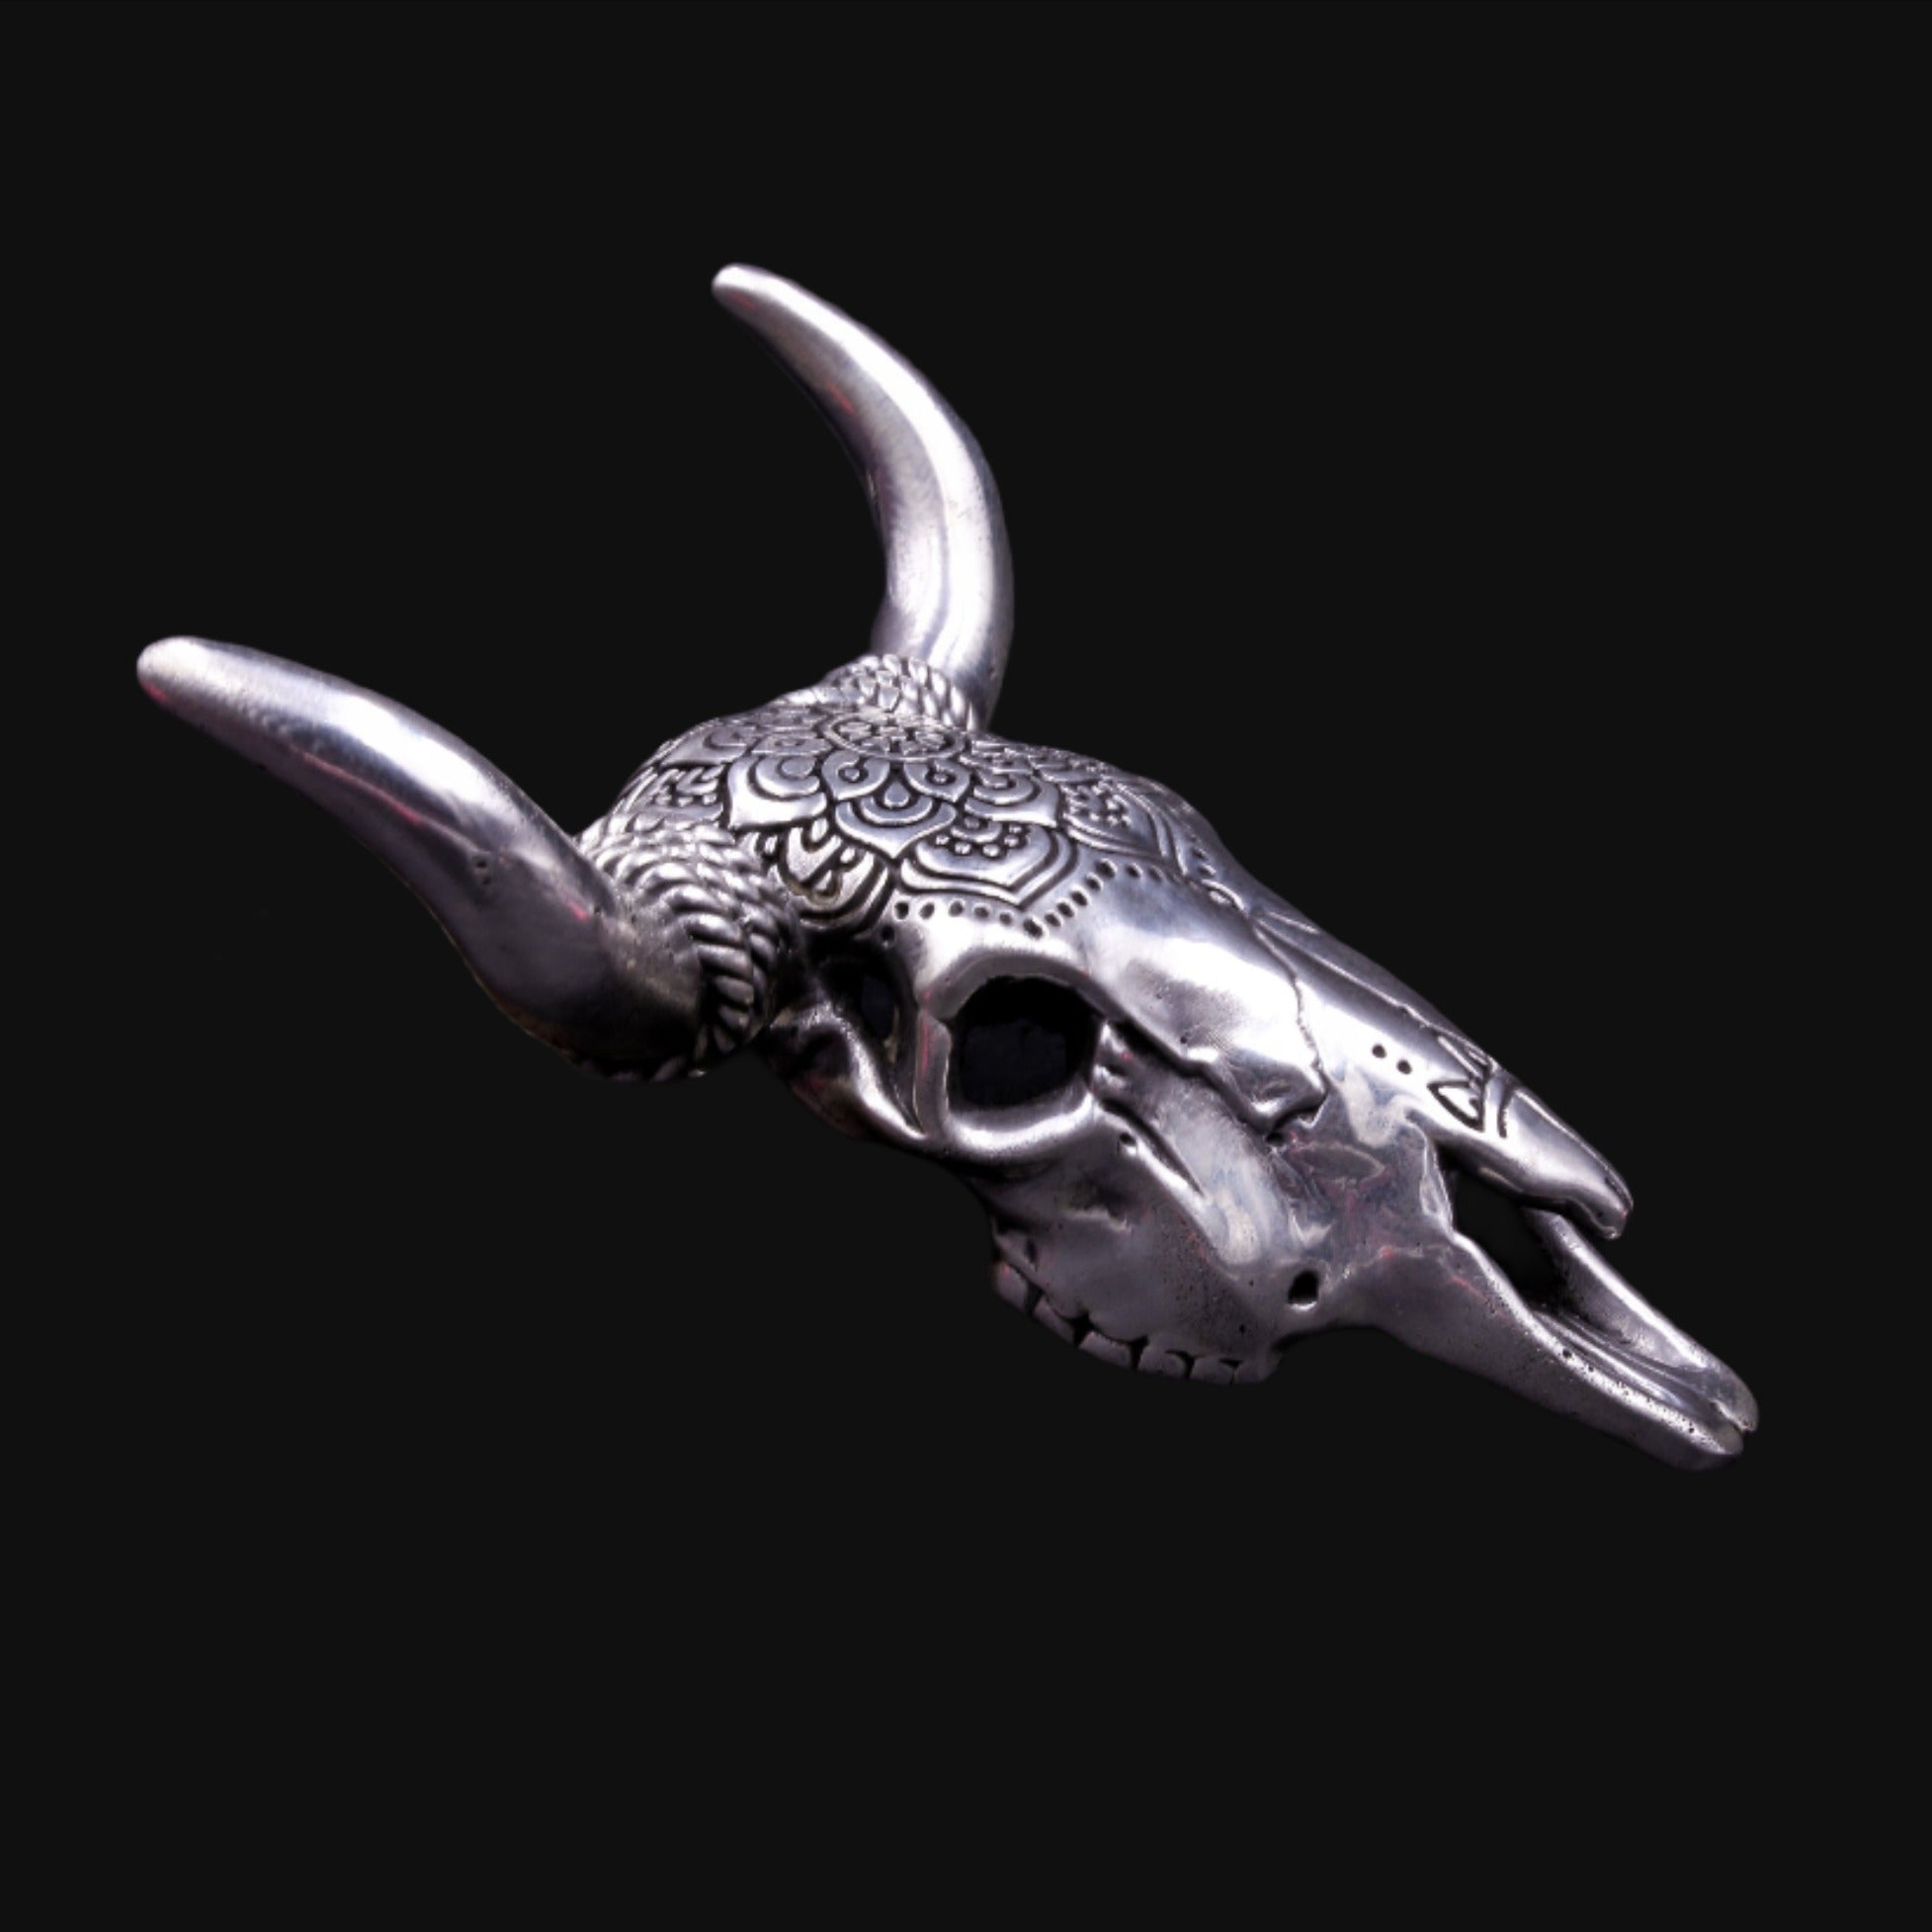 Ornate Bull Skull - SignalOaks Silver Statue